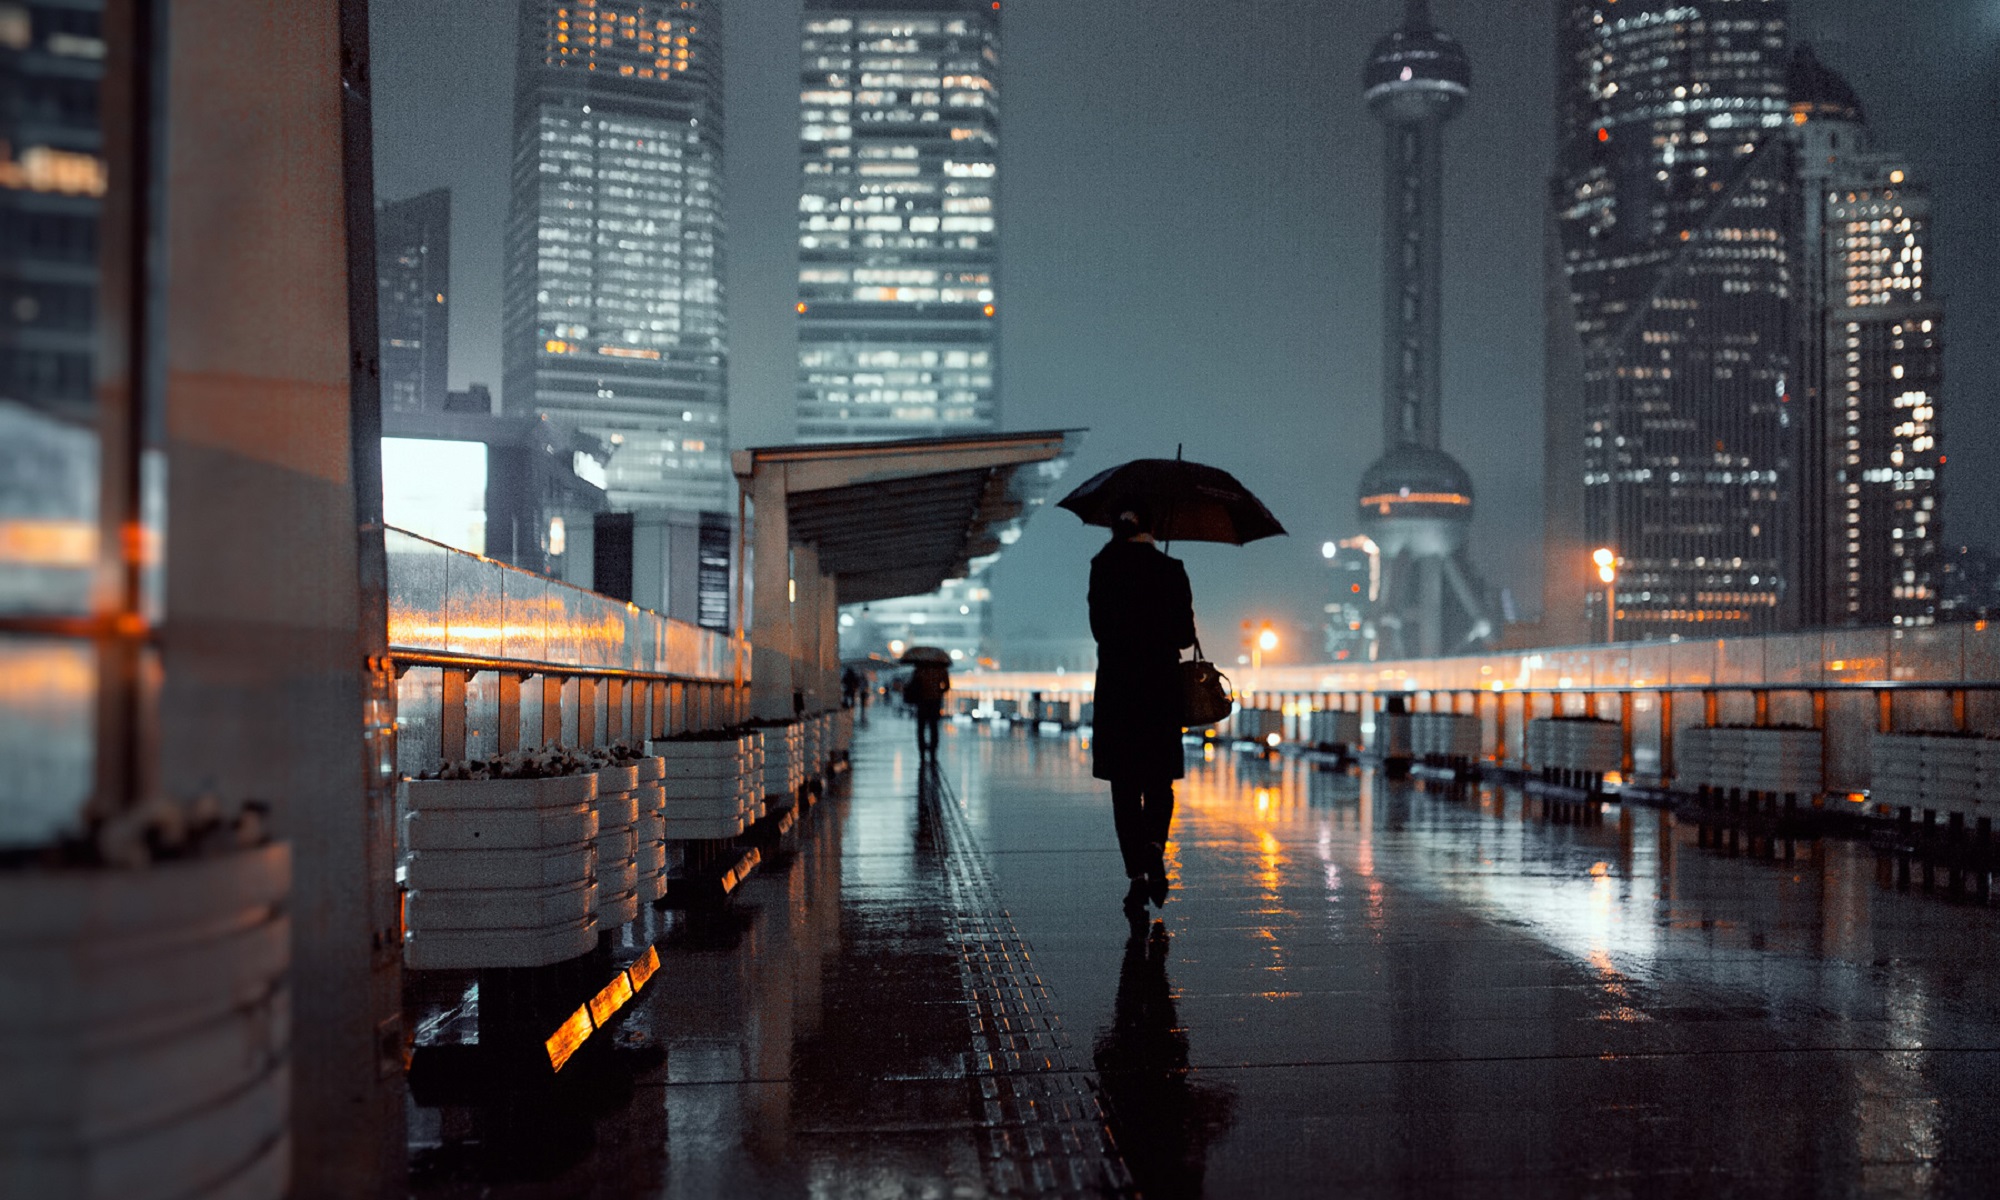 Rain on the streets of Shanghai.